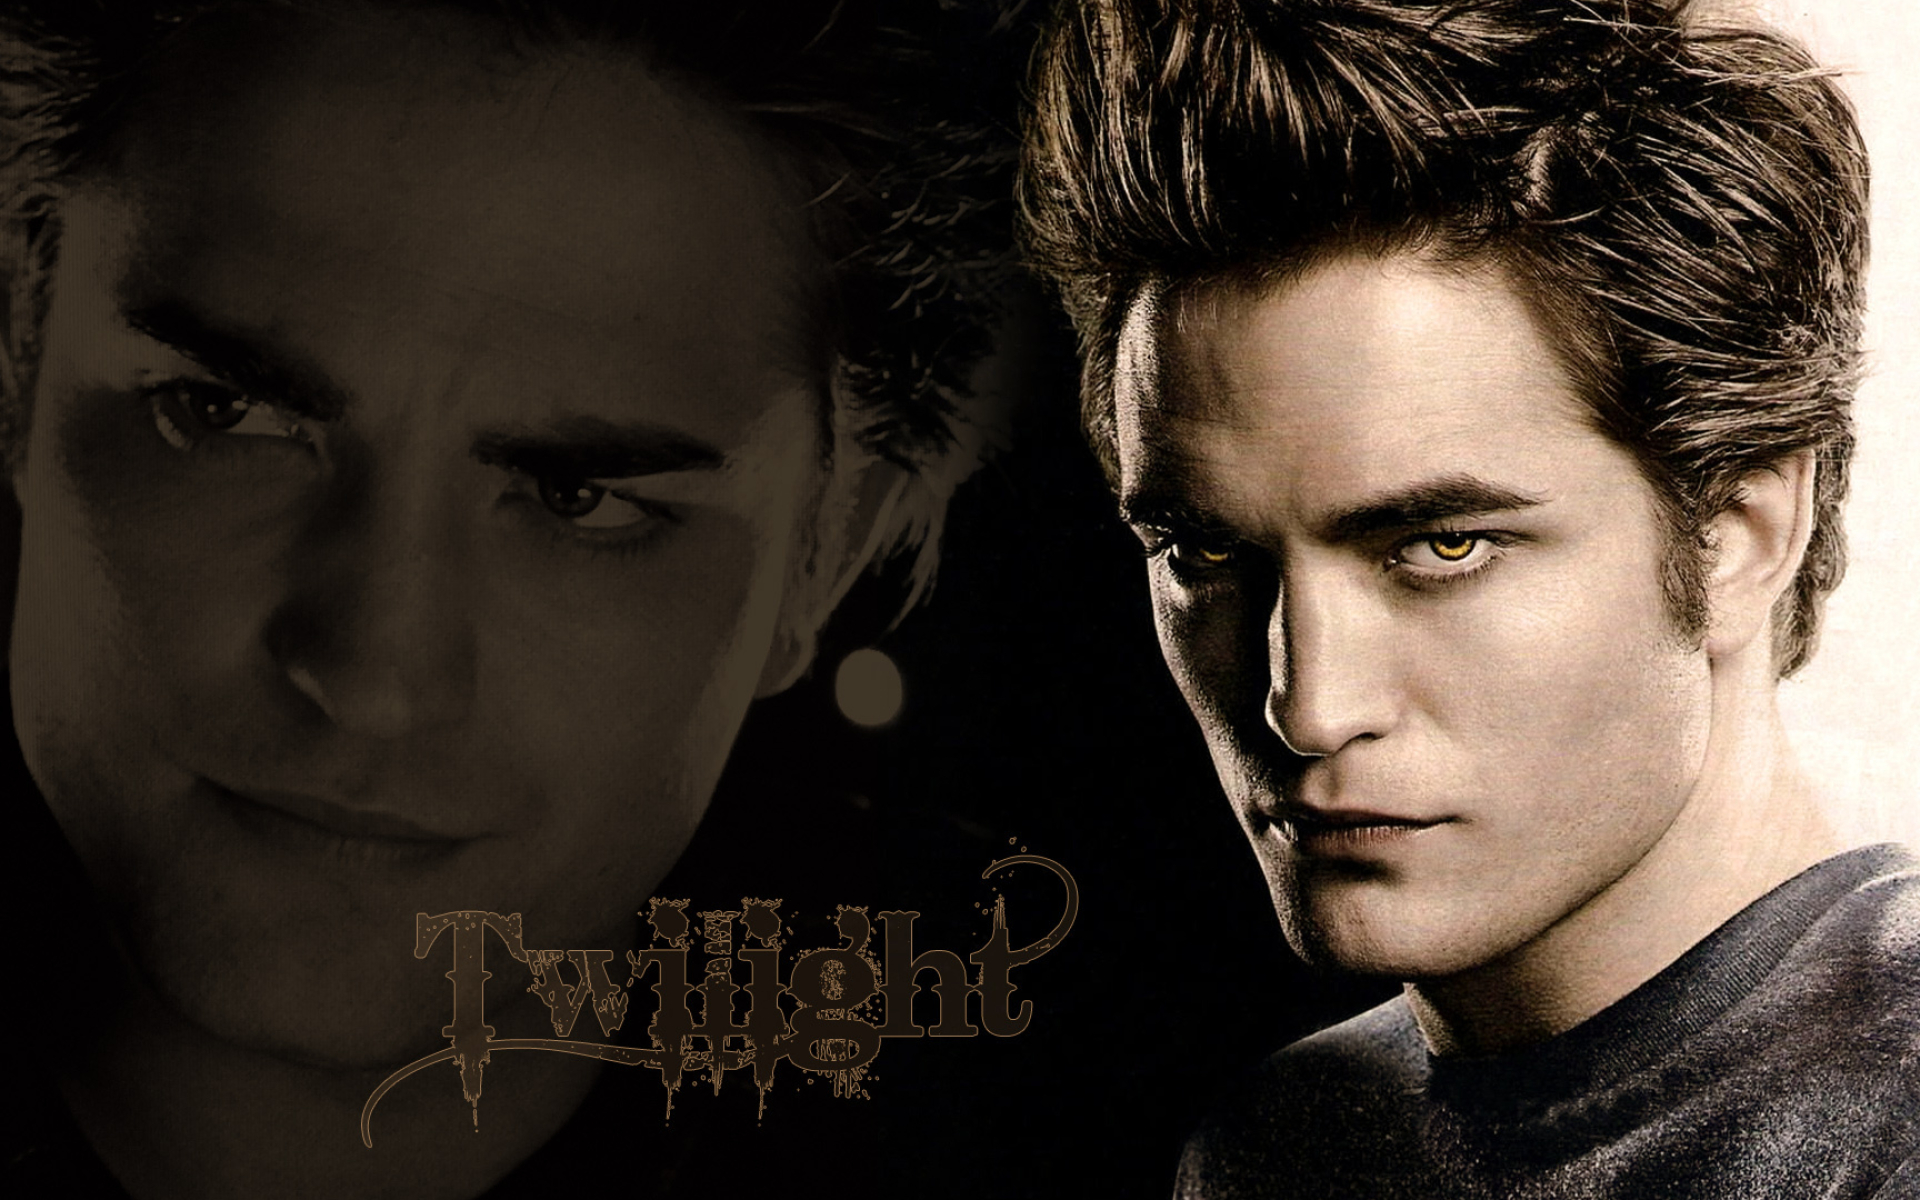 Flashback wallpapers, Robert Pattinson, Thinking of Rob, Twilight moments, 1920x1200 HD Desktop